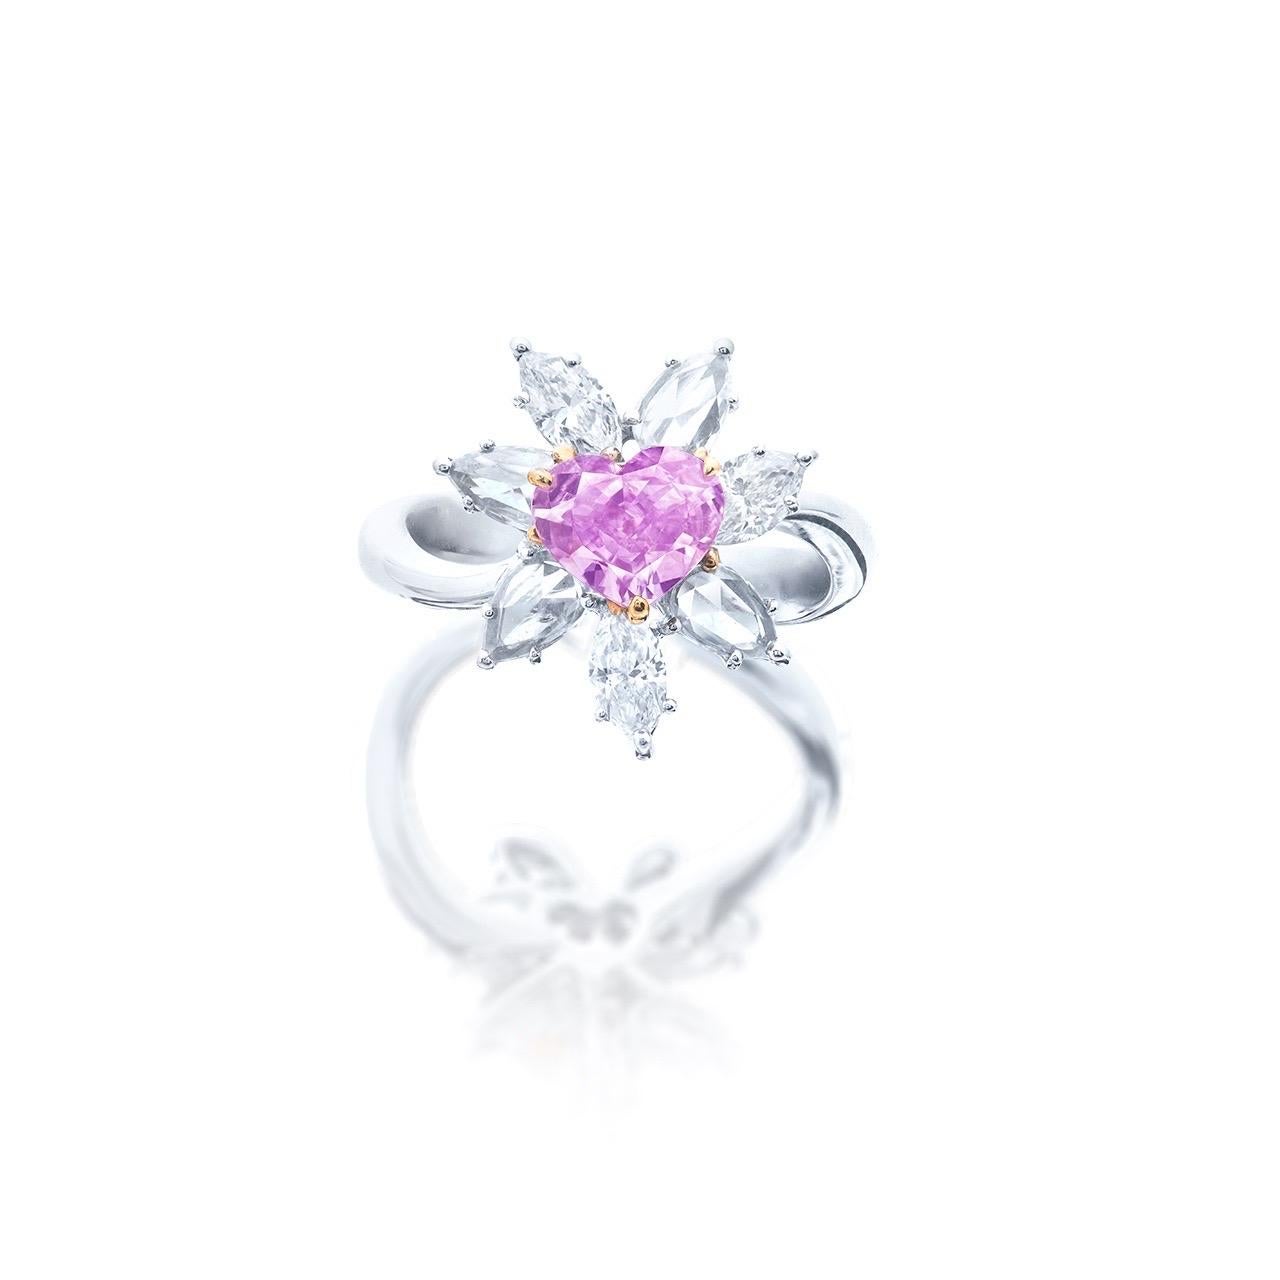 Heart Cut Emilio Jewelry Gia Certified Intense Purple Diamond Ring For Sale